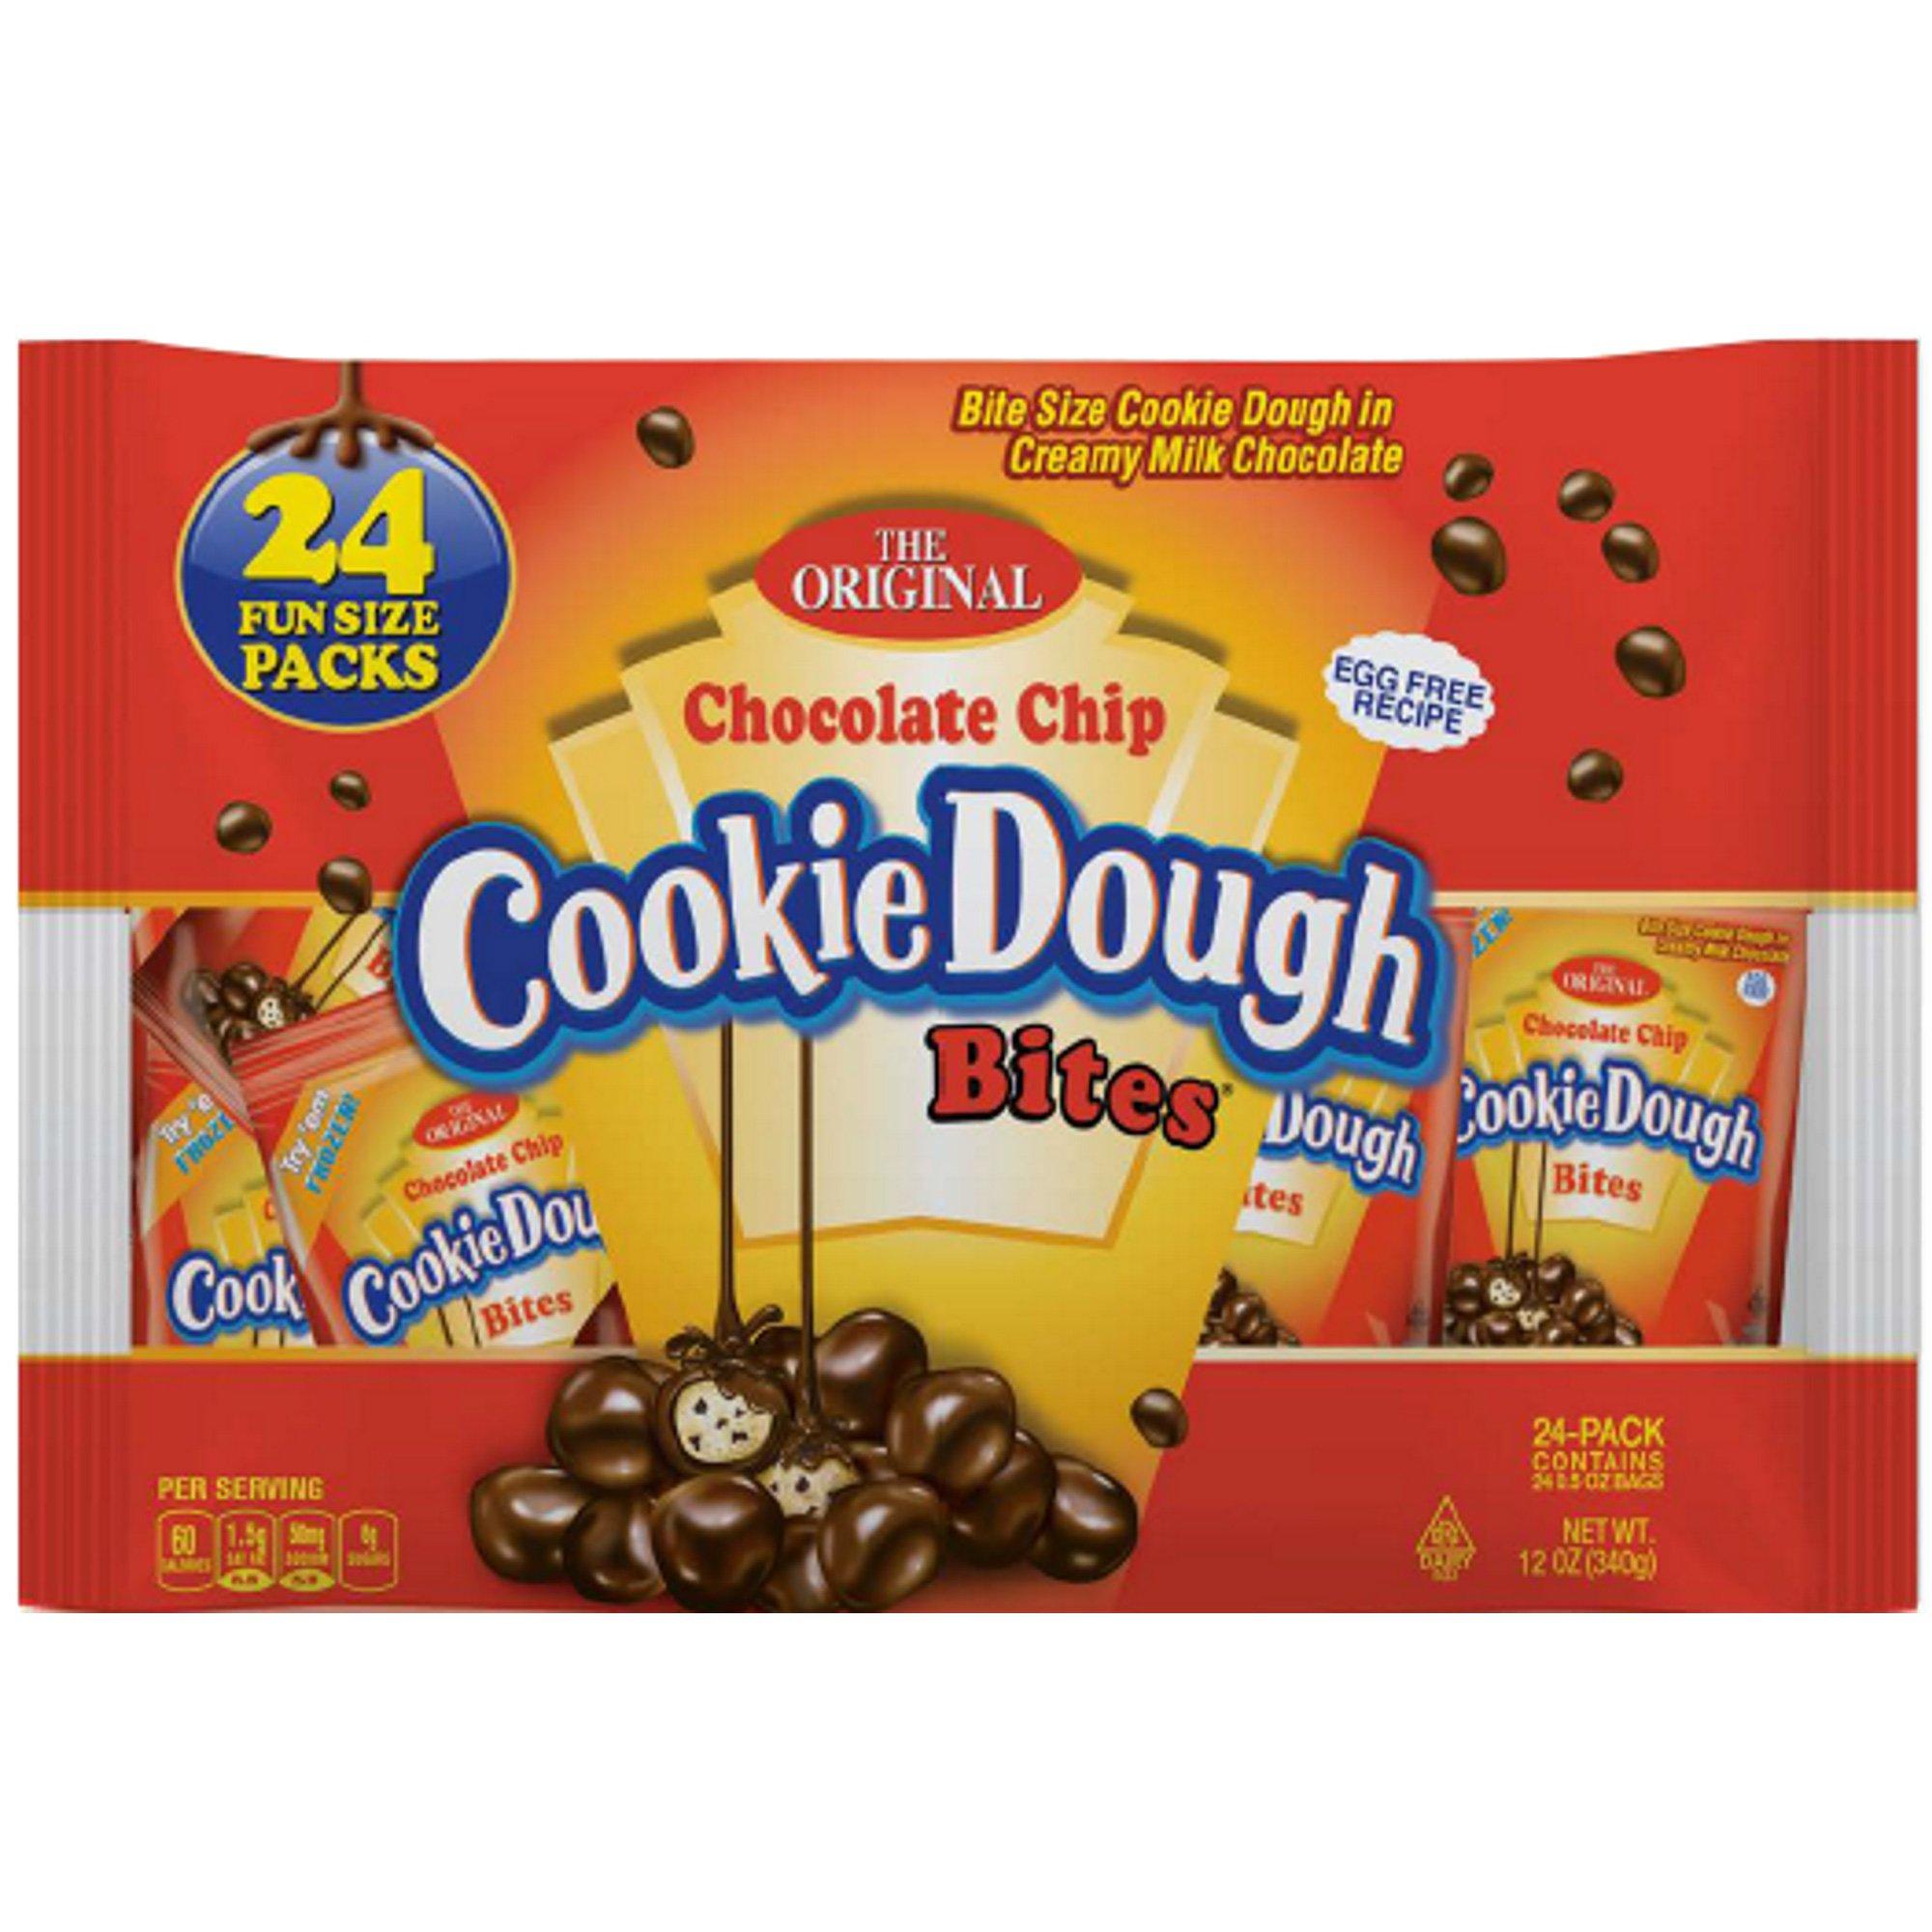 The Original Cookie Dough Bite Original Chocolate Chip Cookie Candy Bites